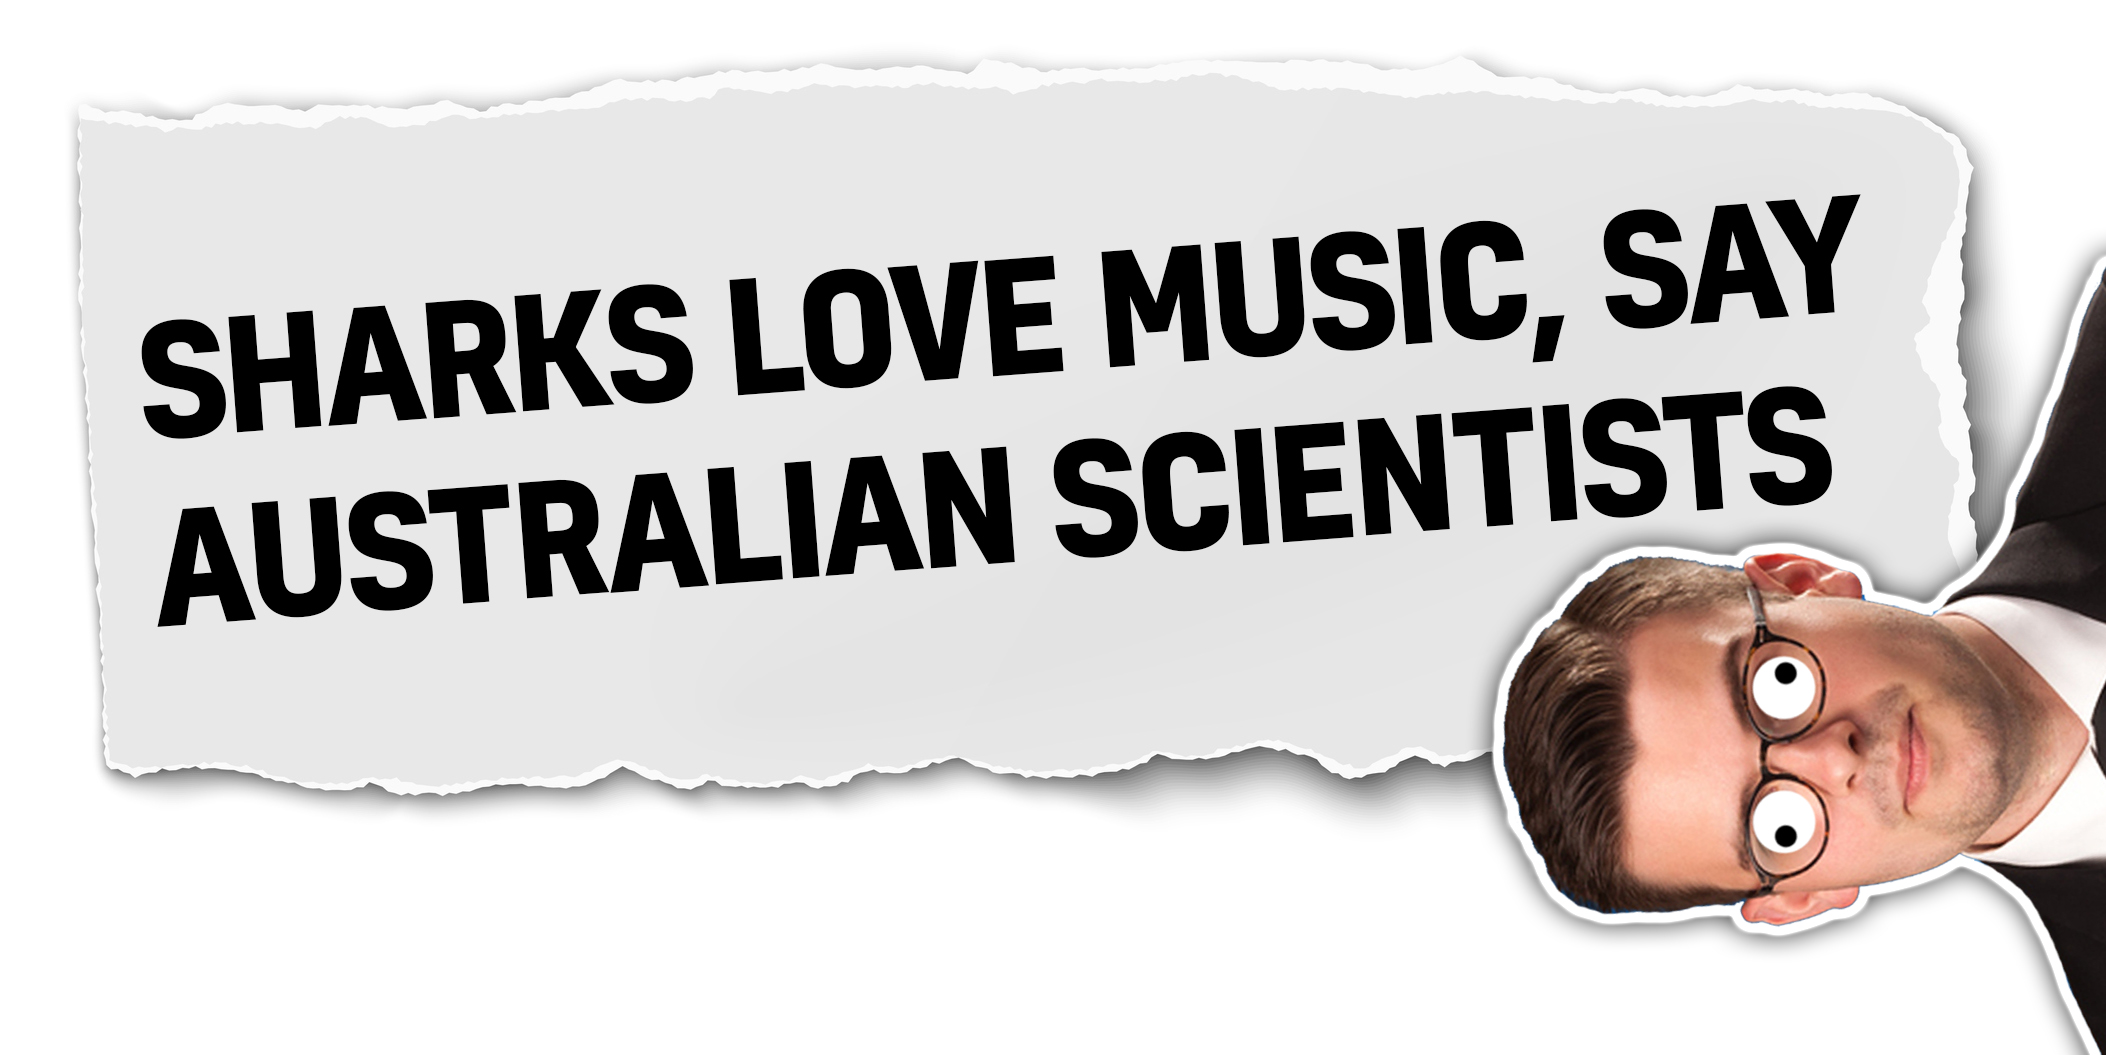 Sharks love music, say Australian scientists